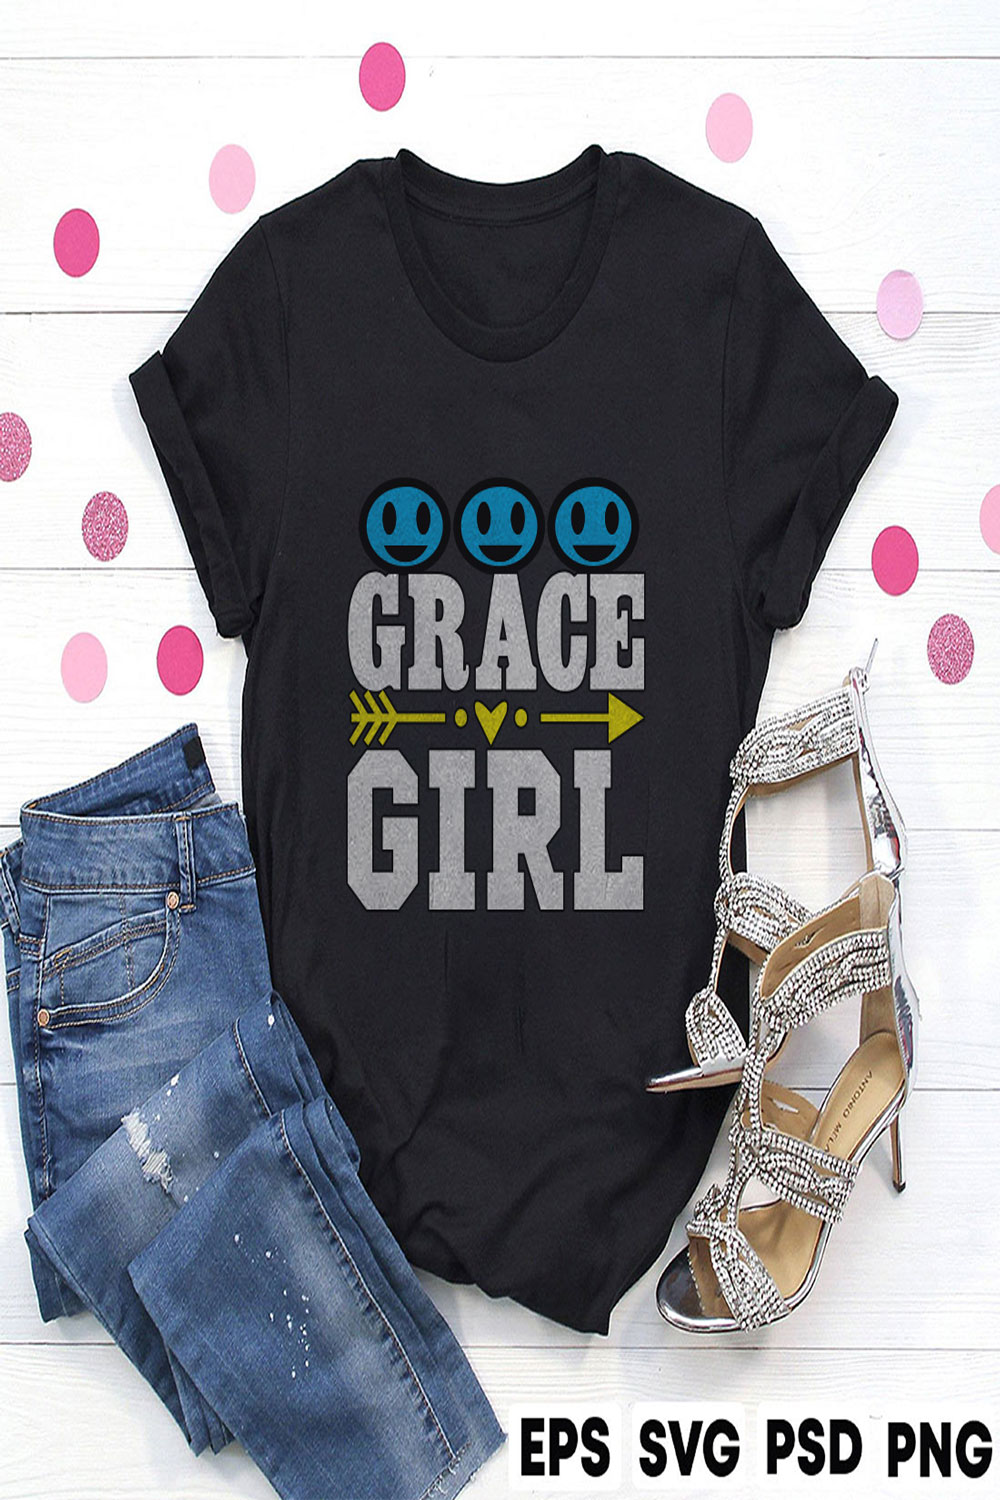 Grace Girl pinterest preview image.